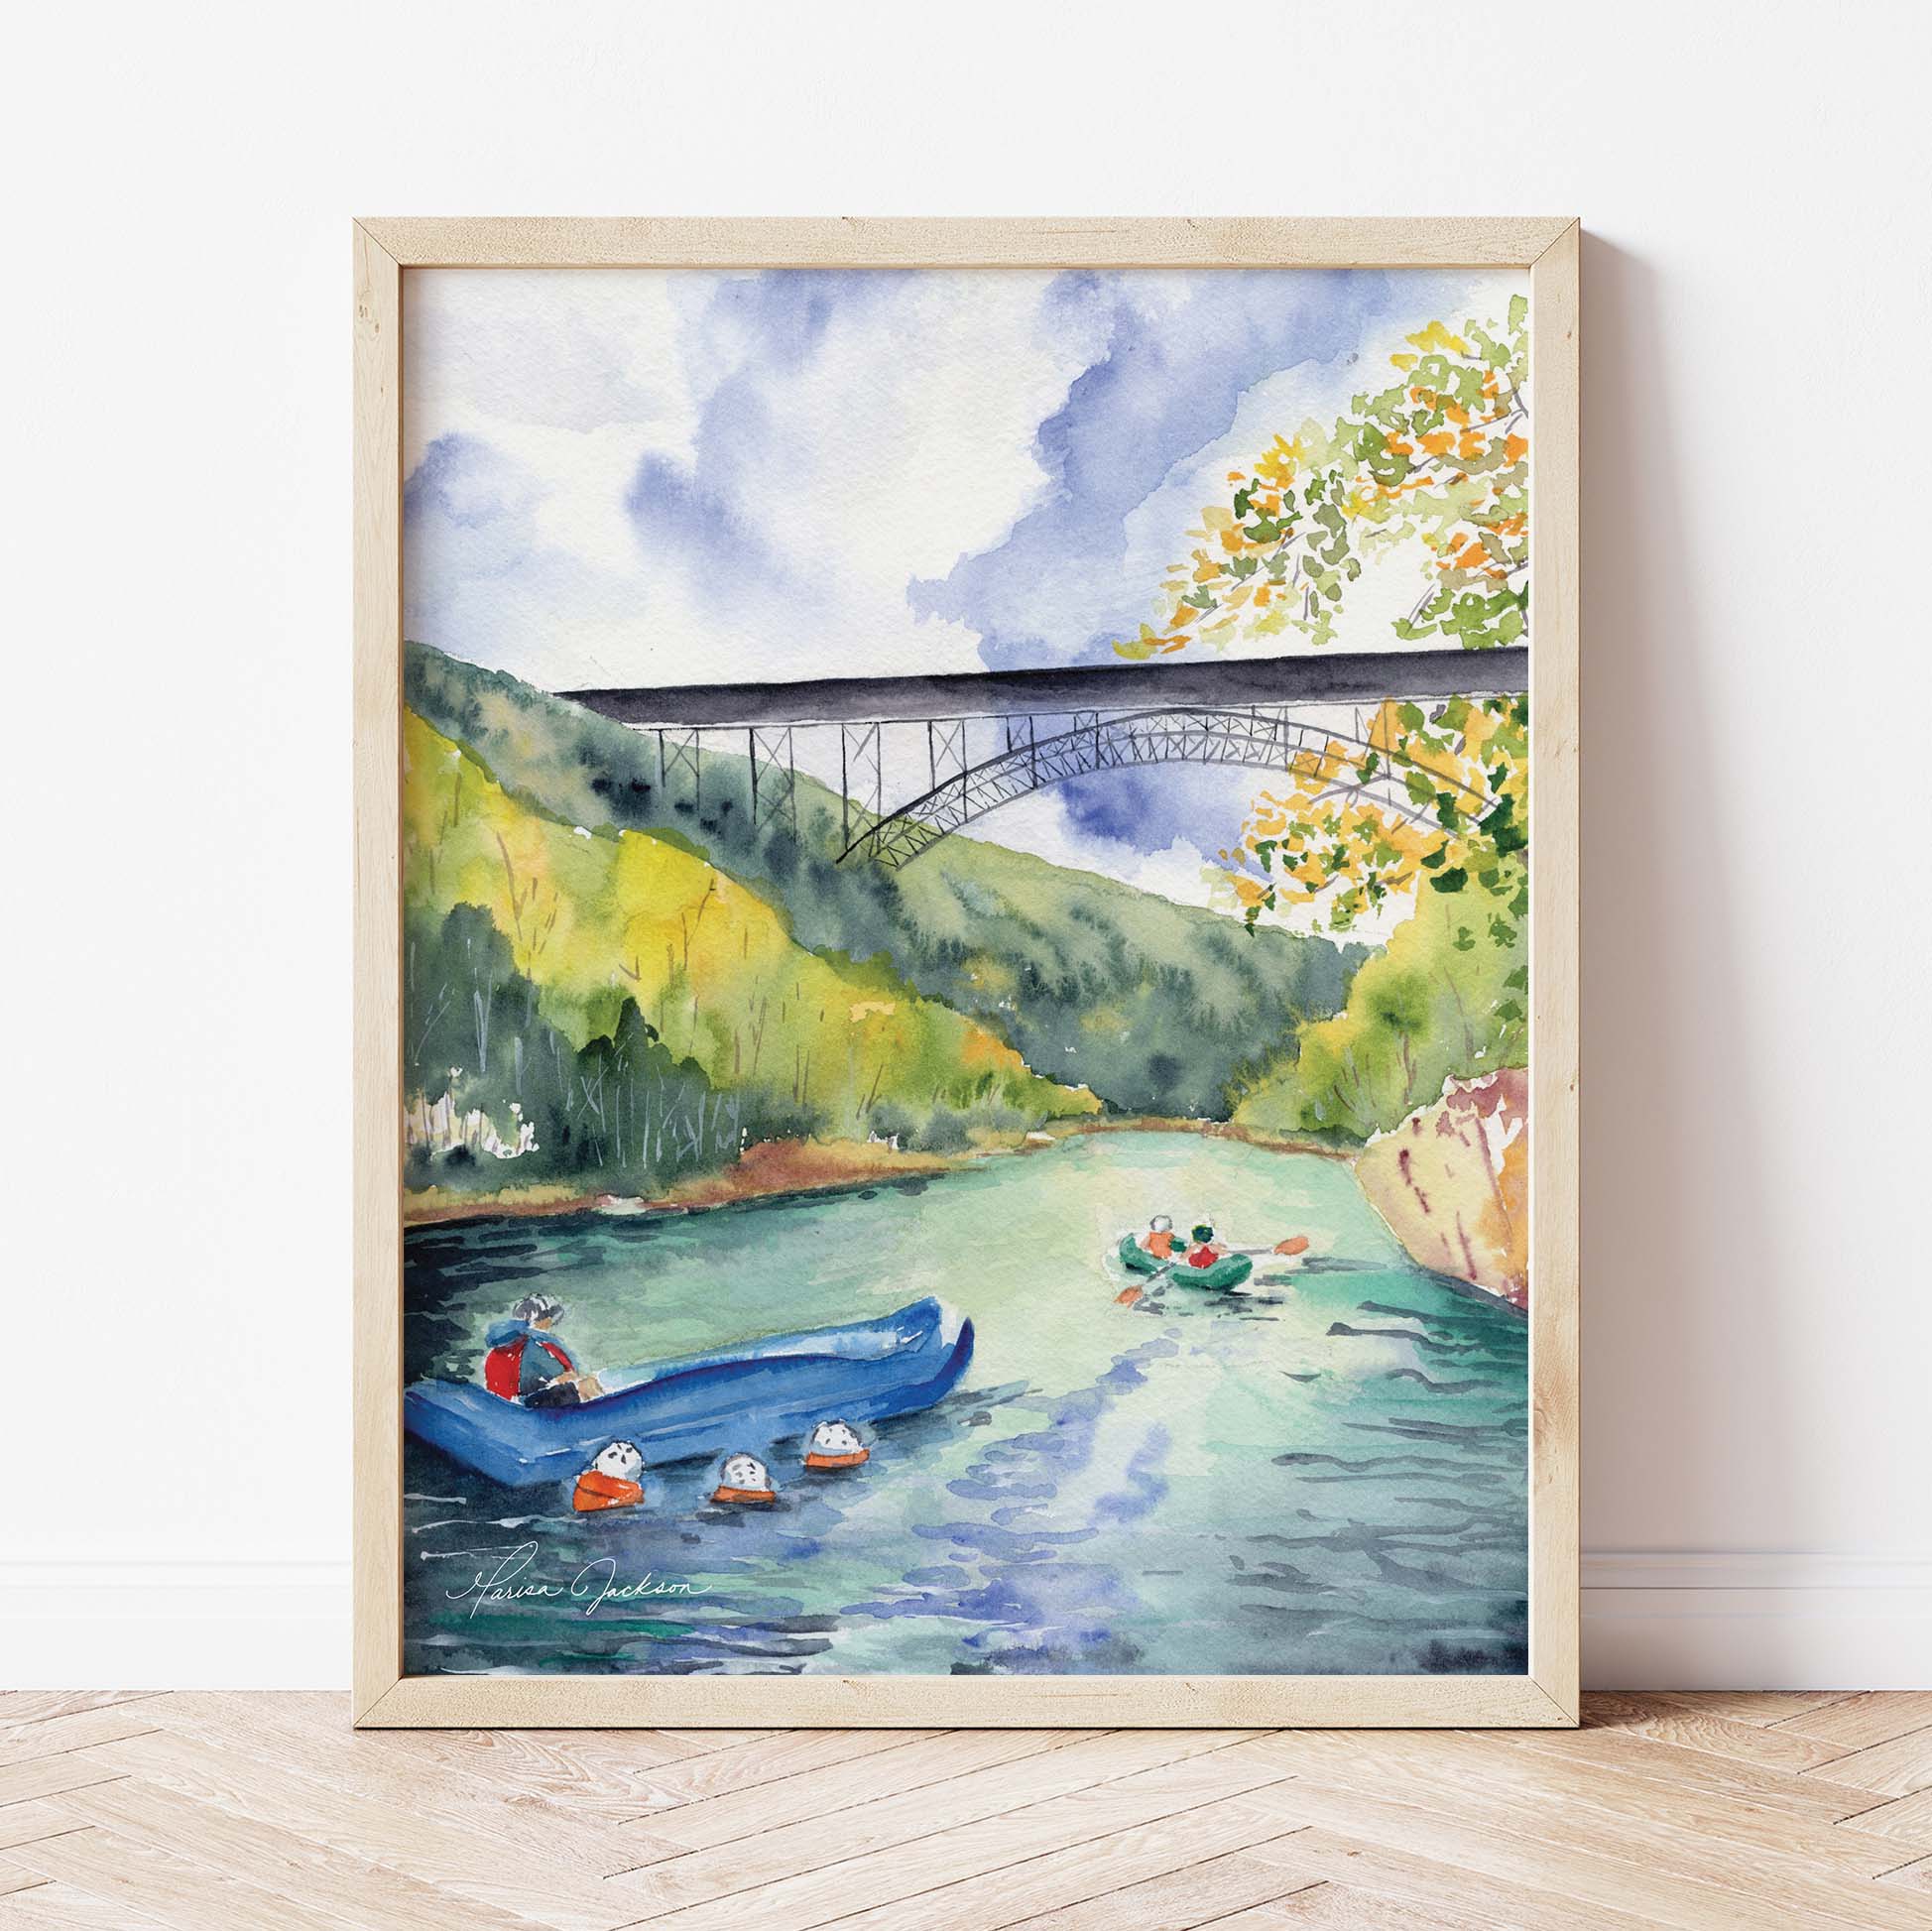 New River Gorge State Park Rafting Art Print